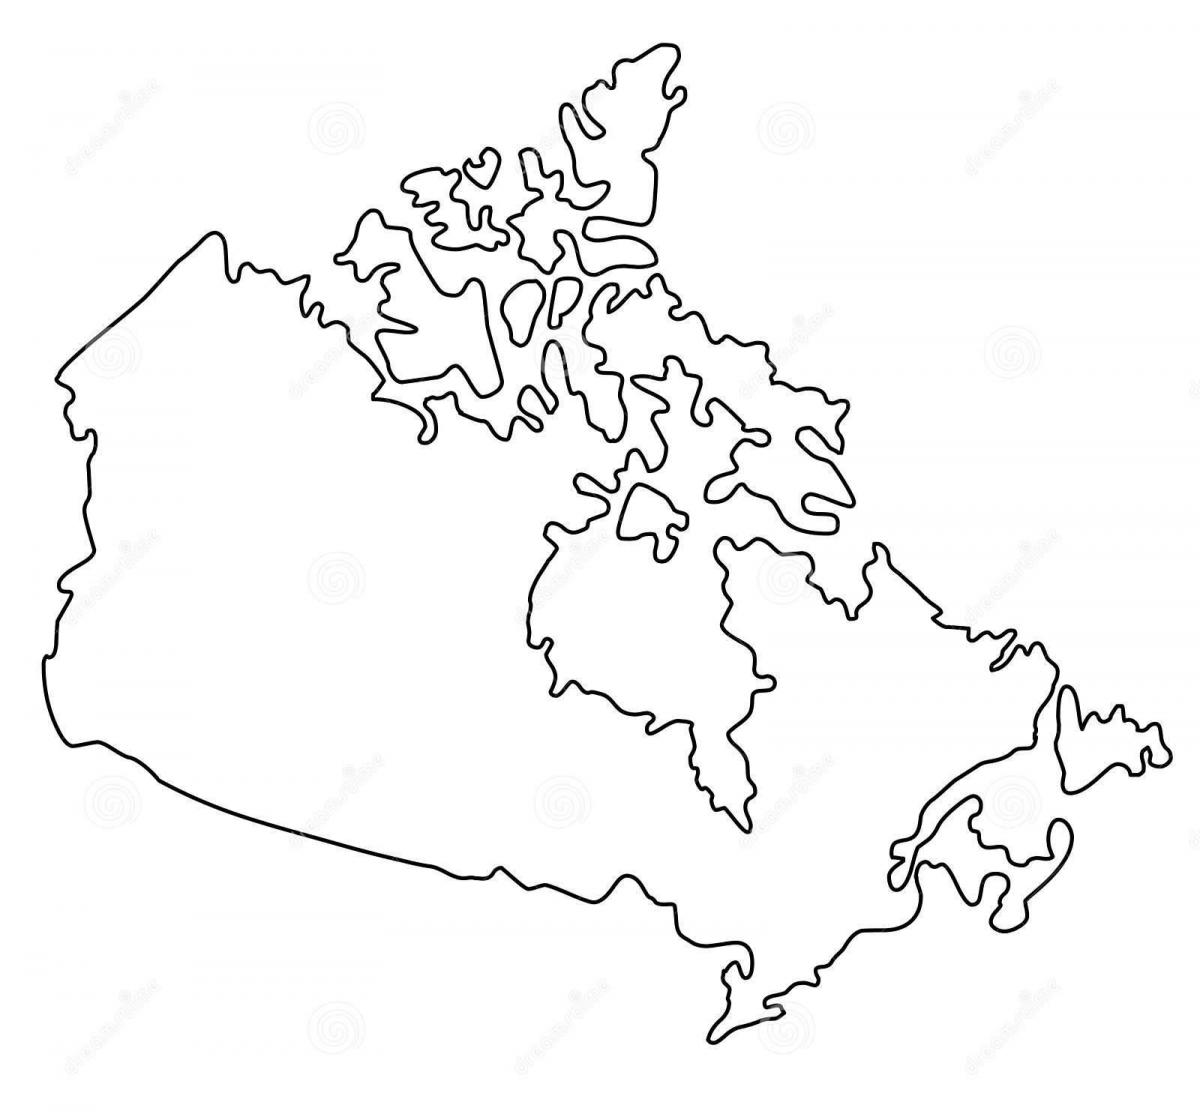 Mapa konturowa Kanady